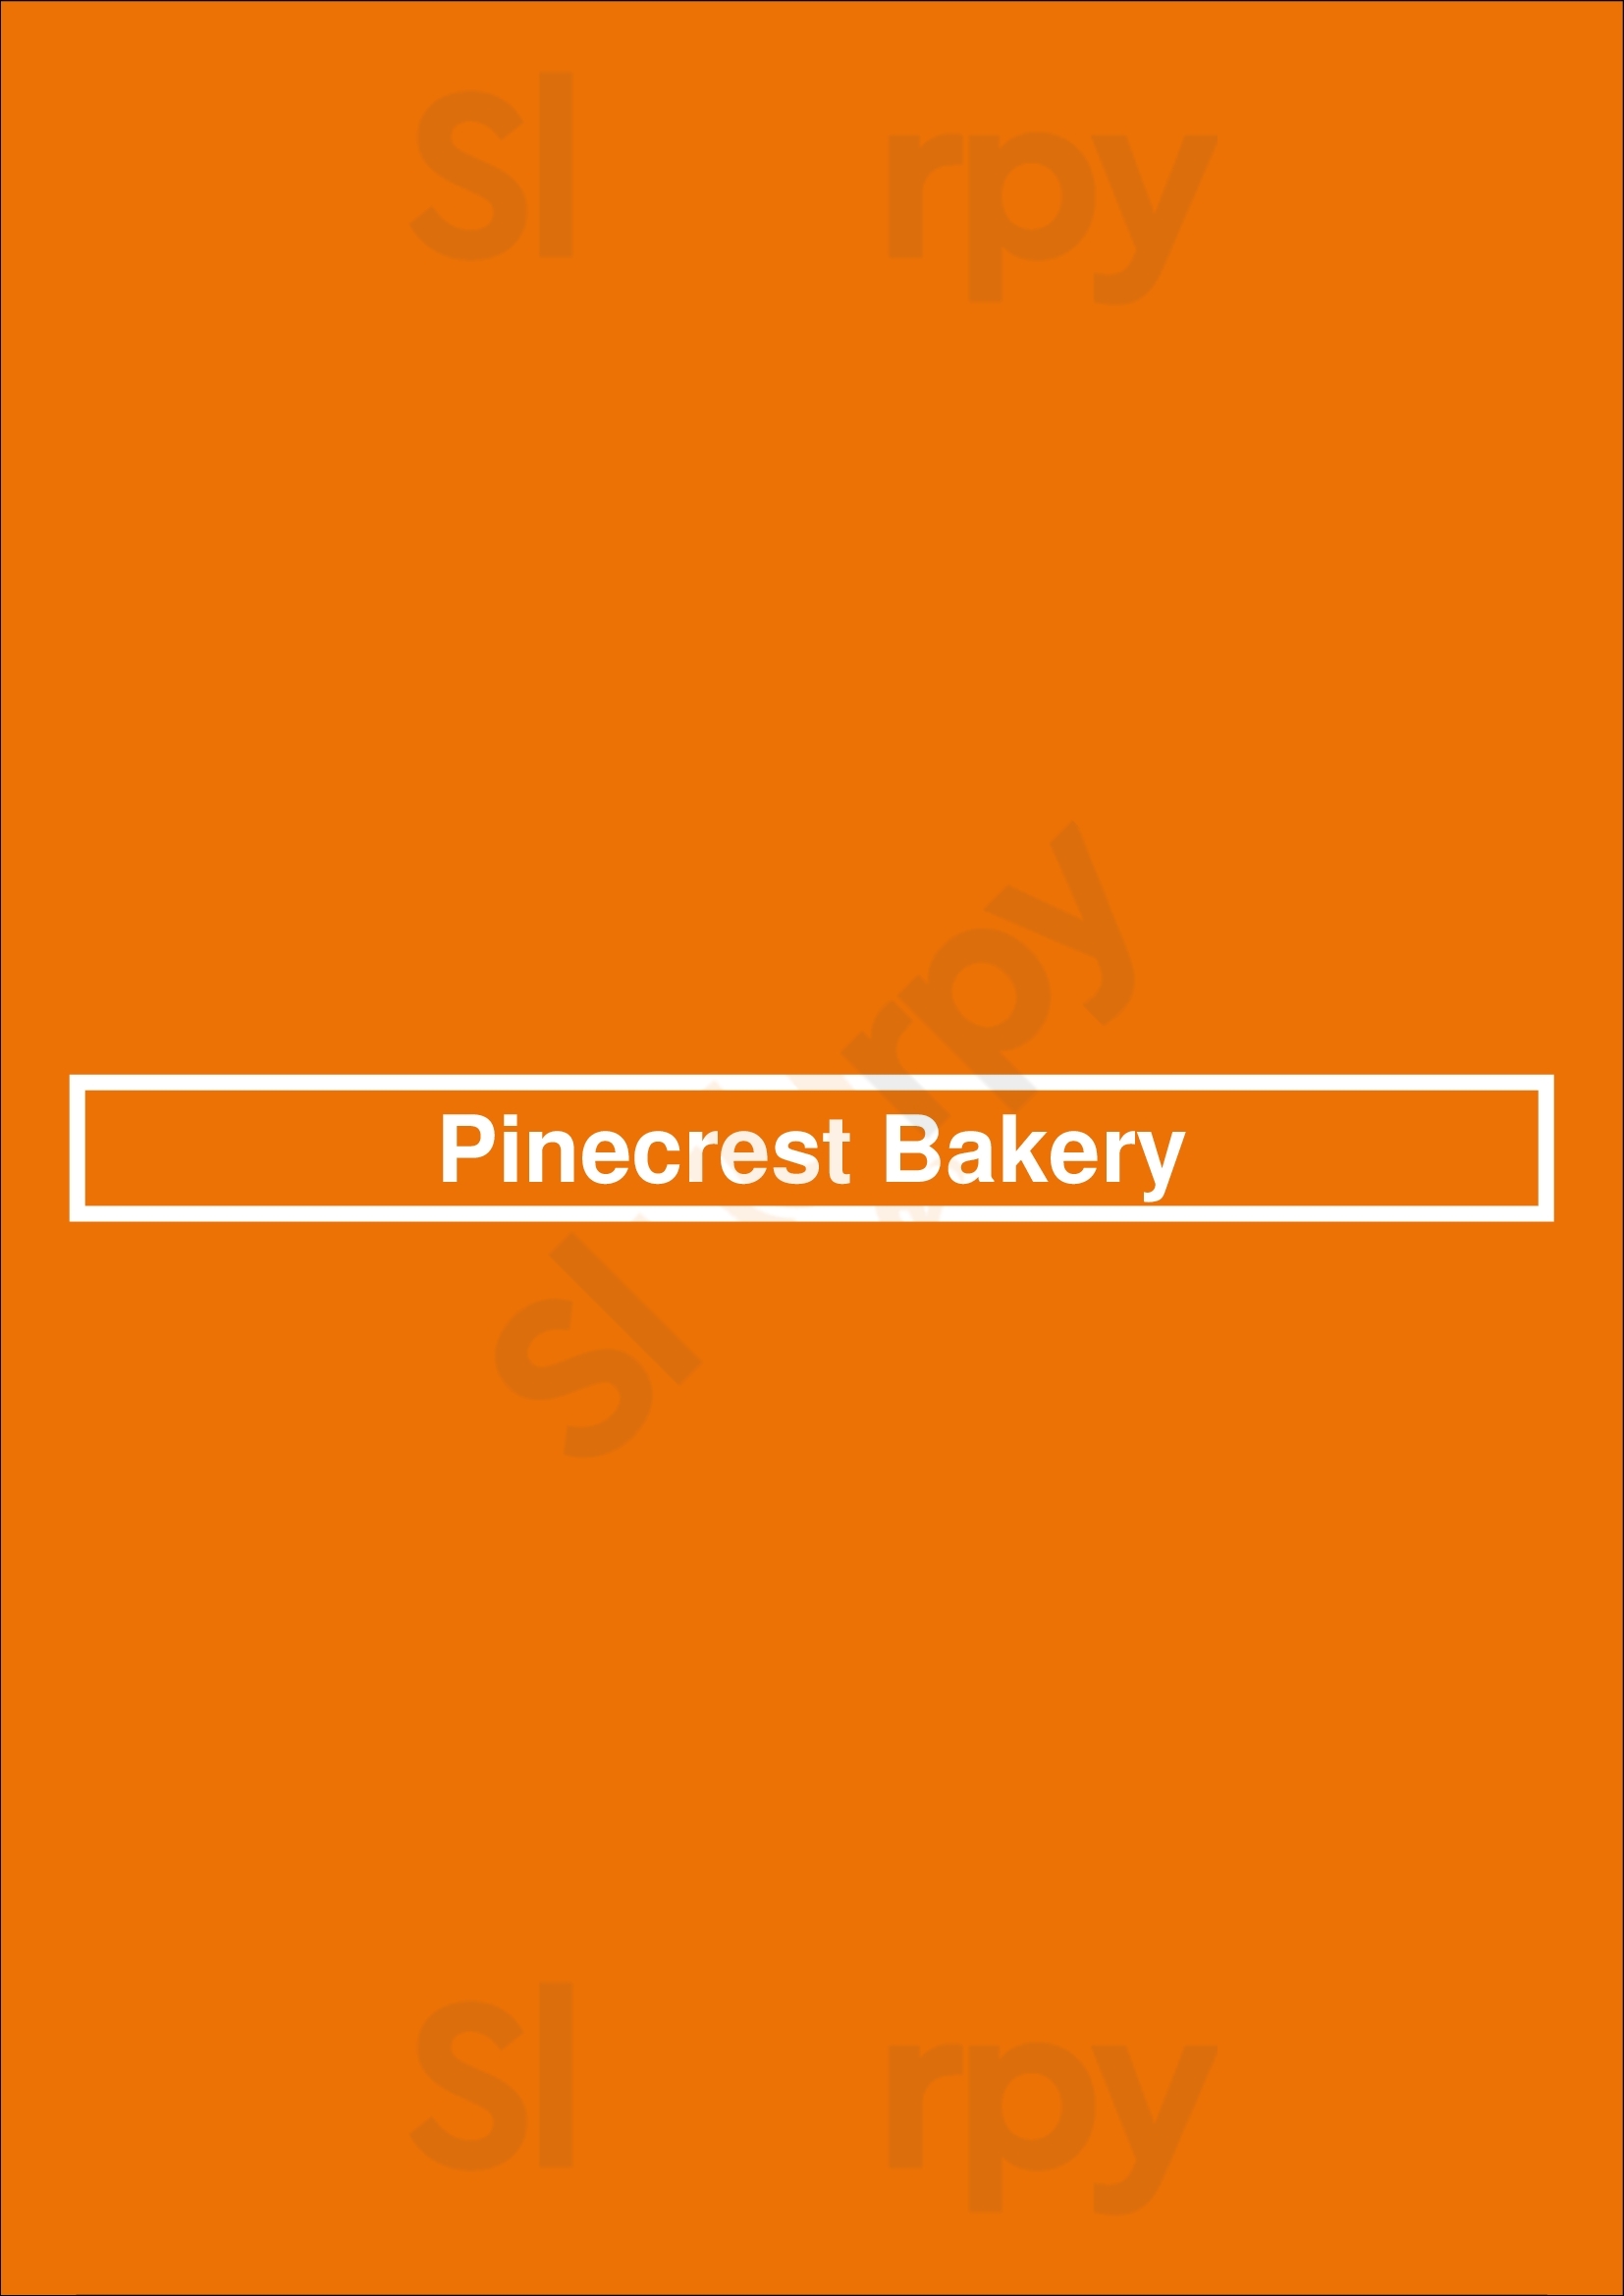 Pinecrest Bakery - Miami Beach Miami Beach Menu - 1